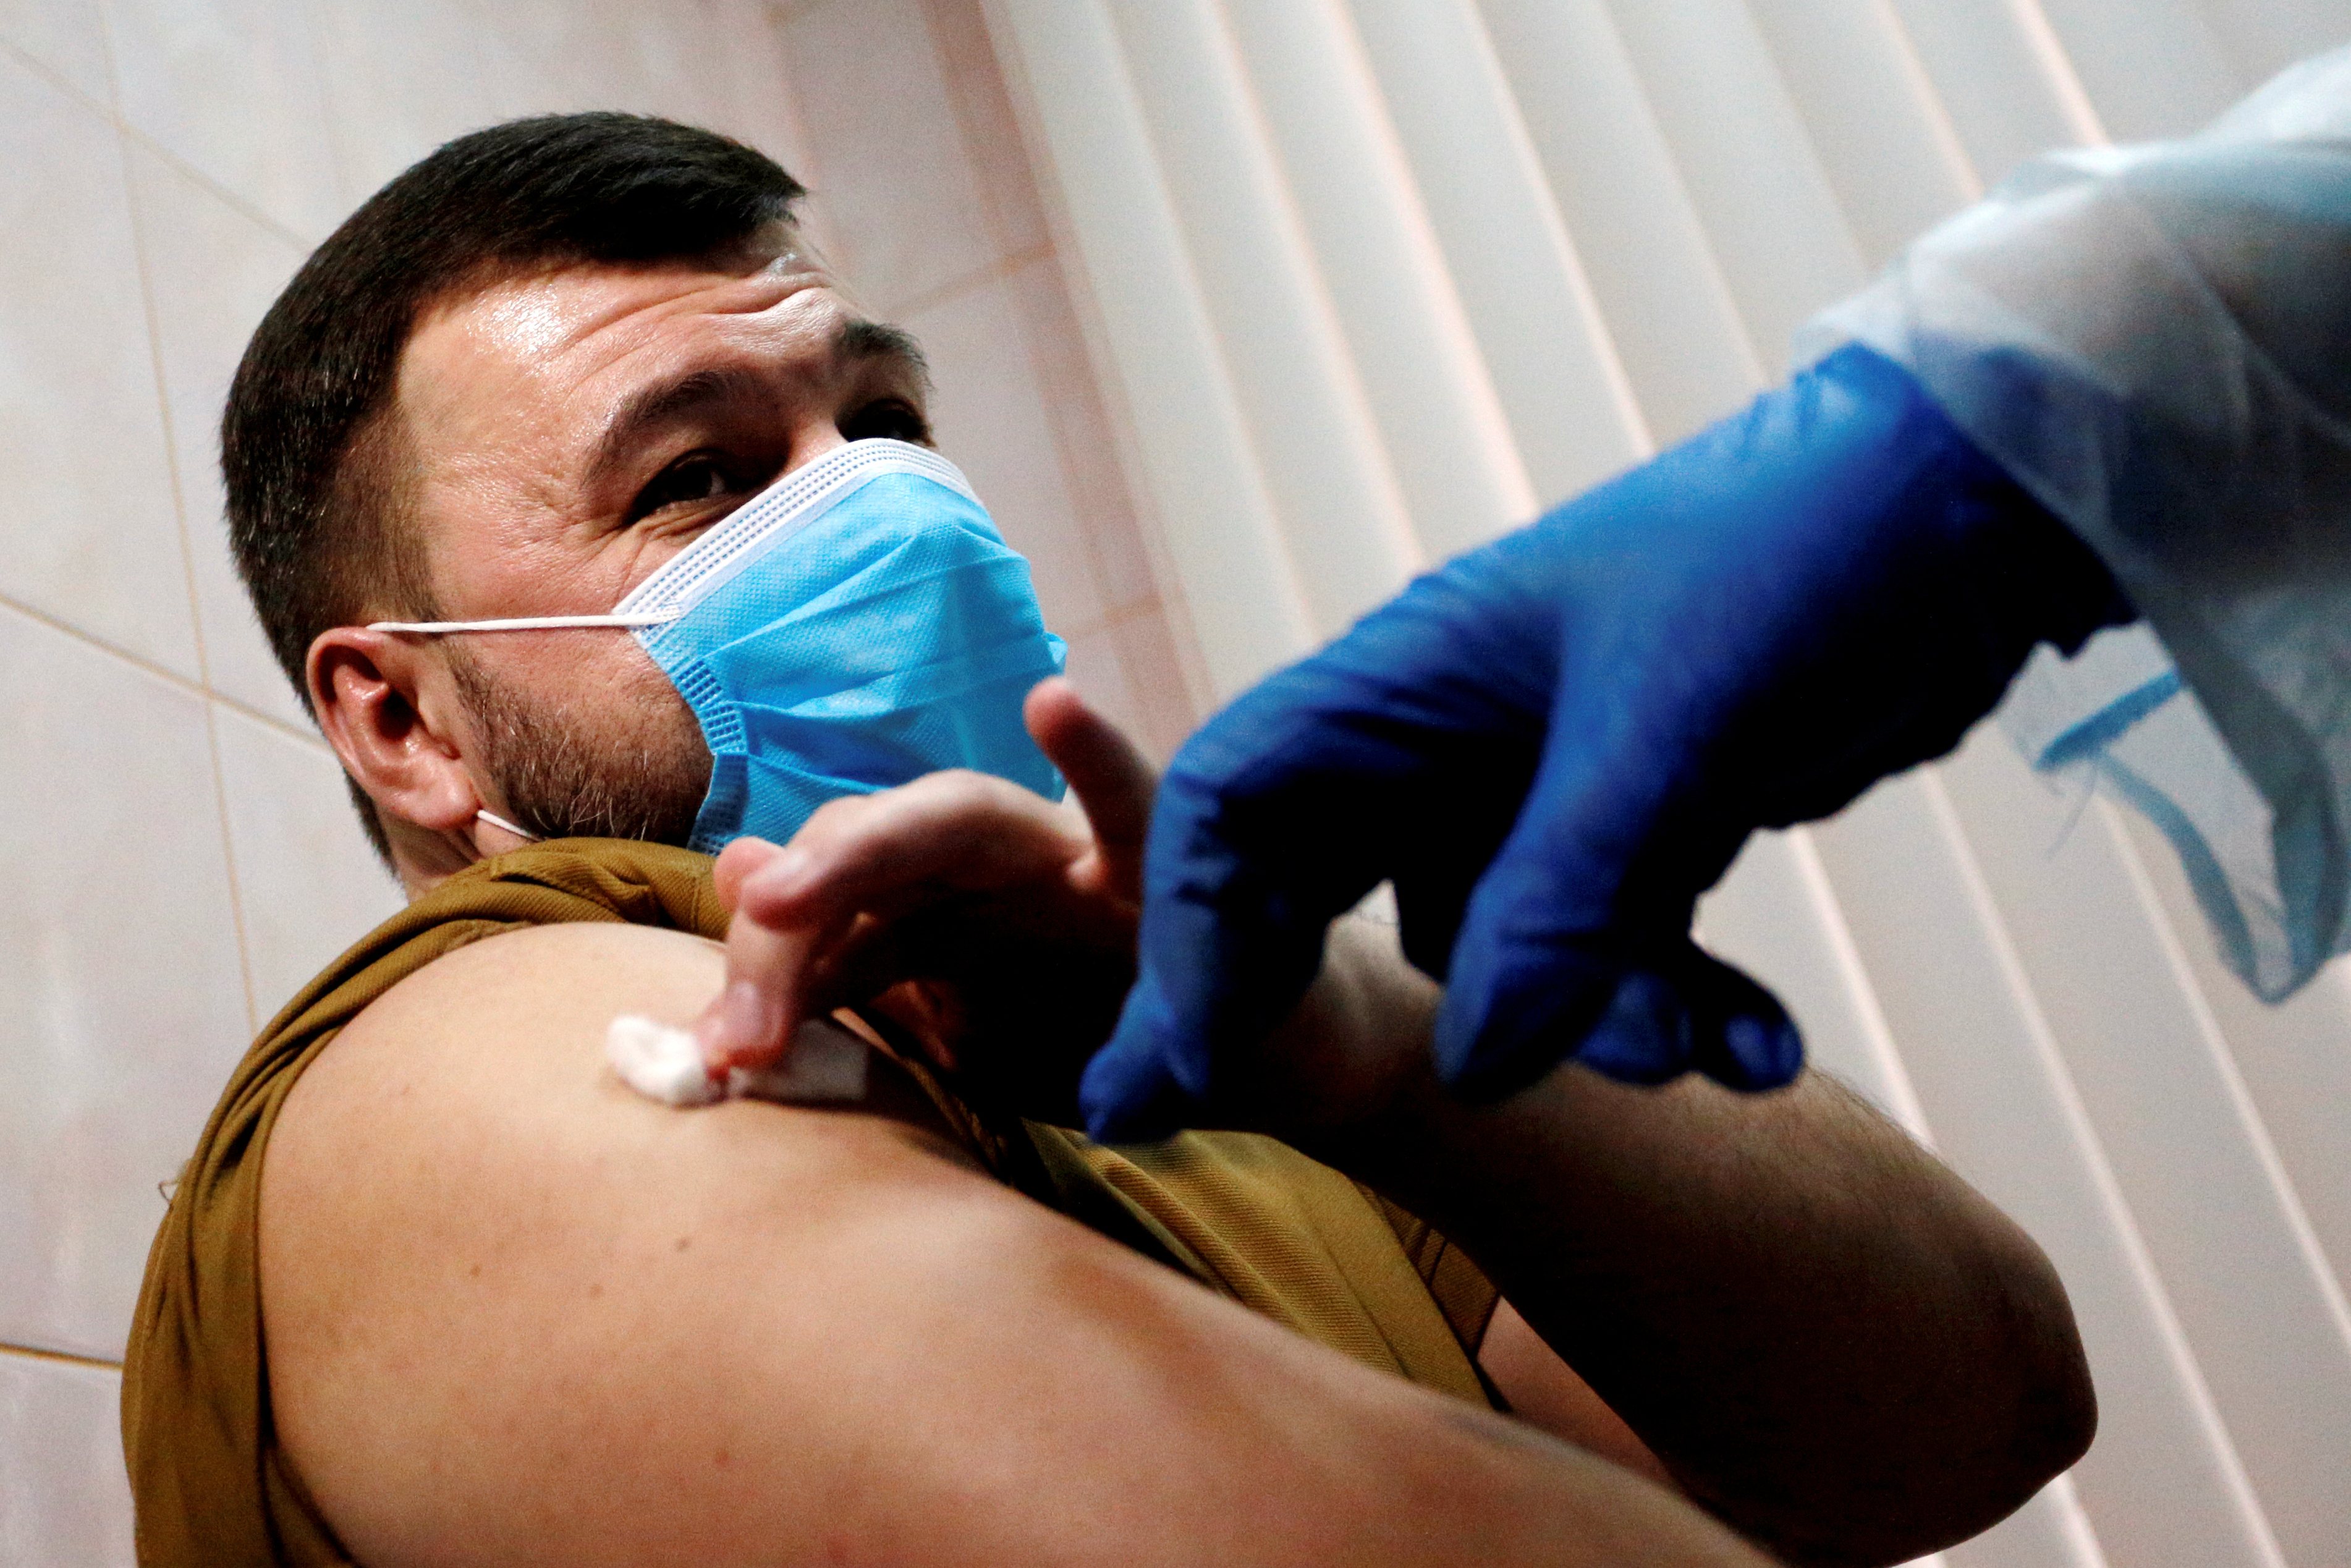 Donetsk residents receive Sputnik V COVID-19 vaccine